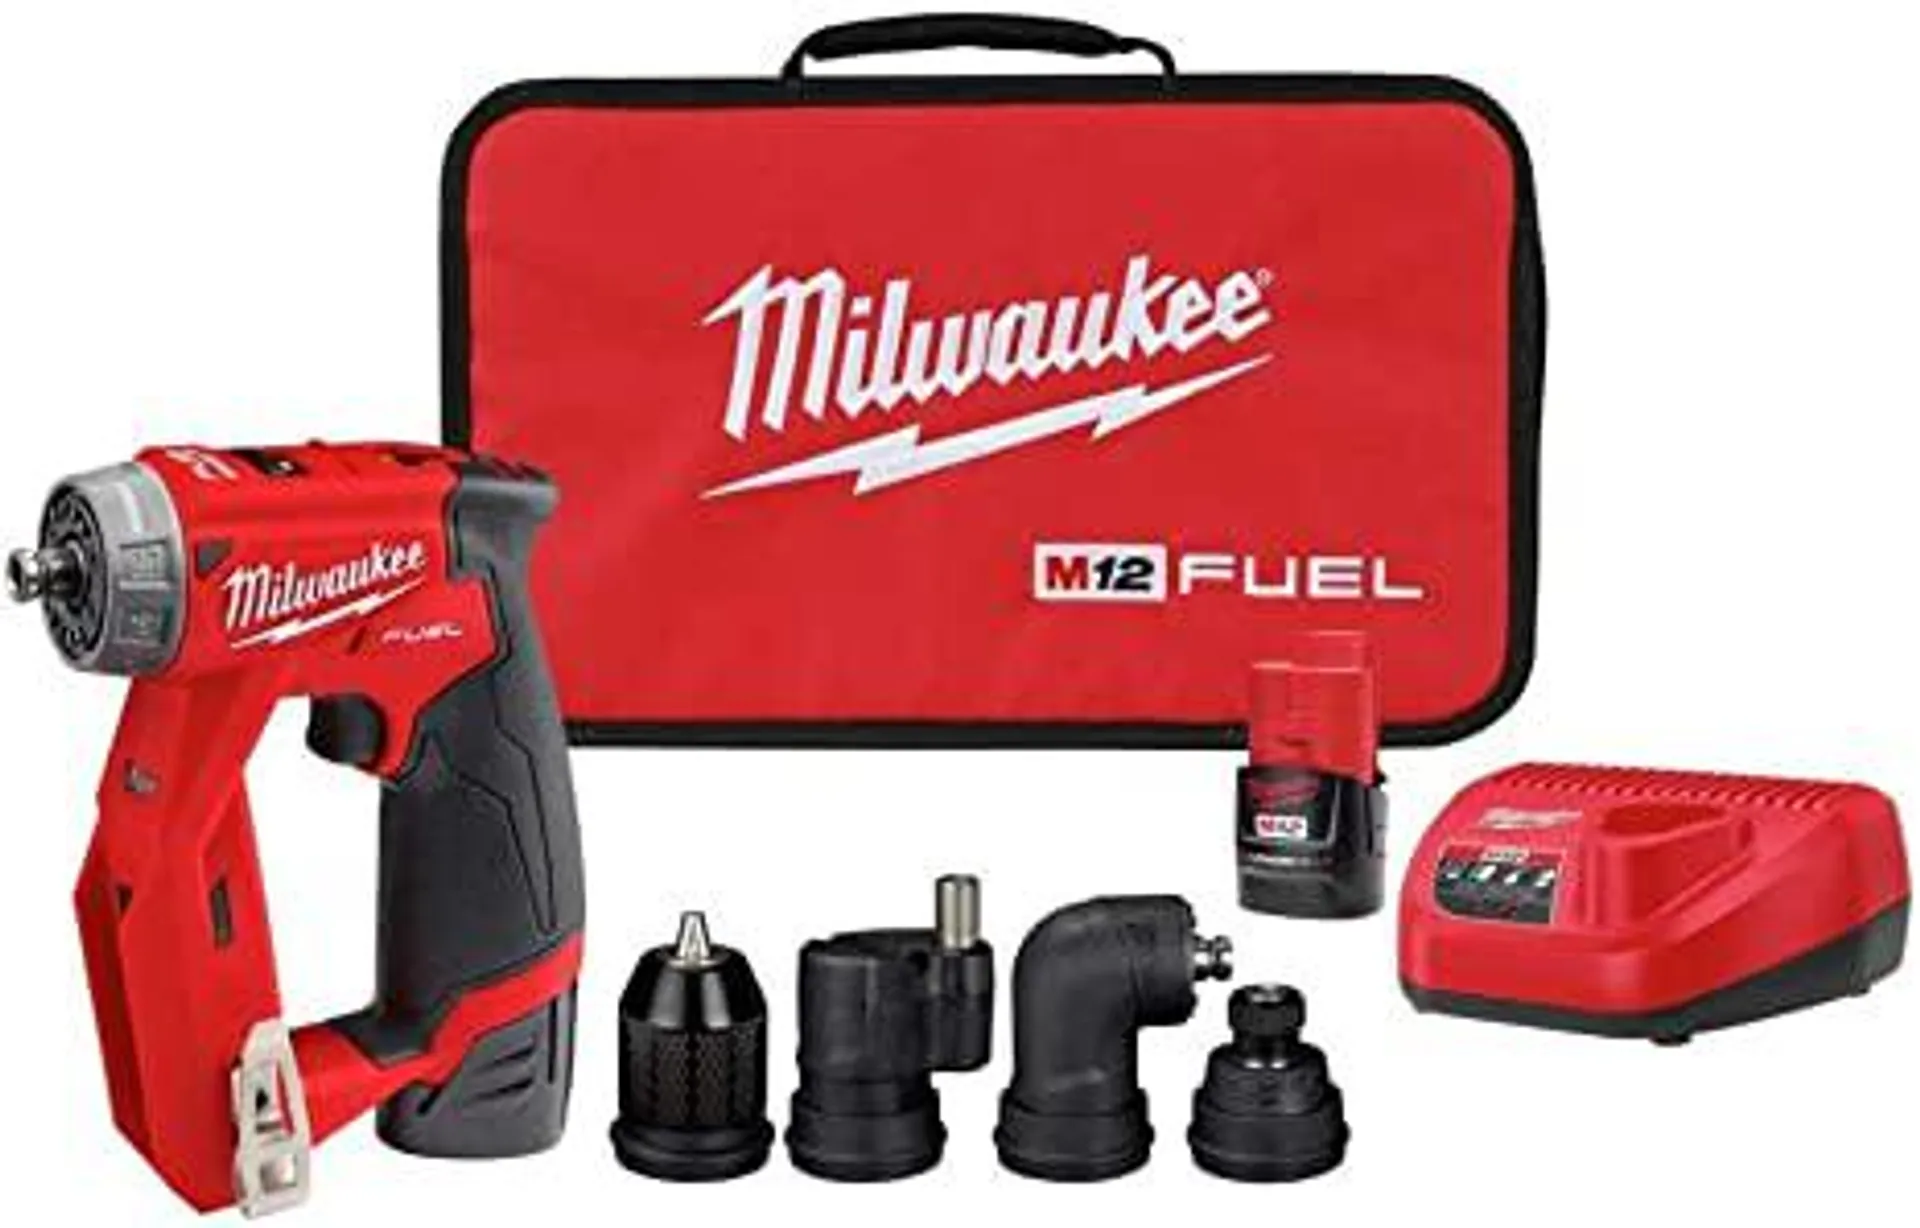 Milwaukee 2505-22 M12 Fuel Installation Drill/Driver Kit